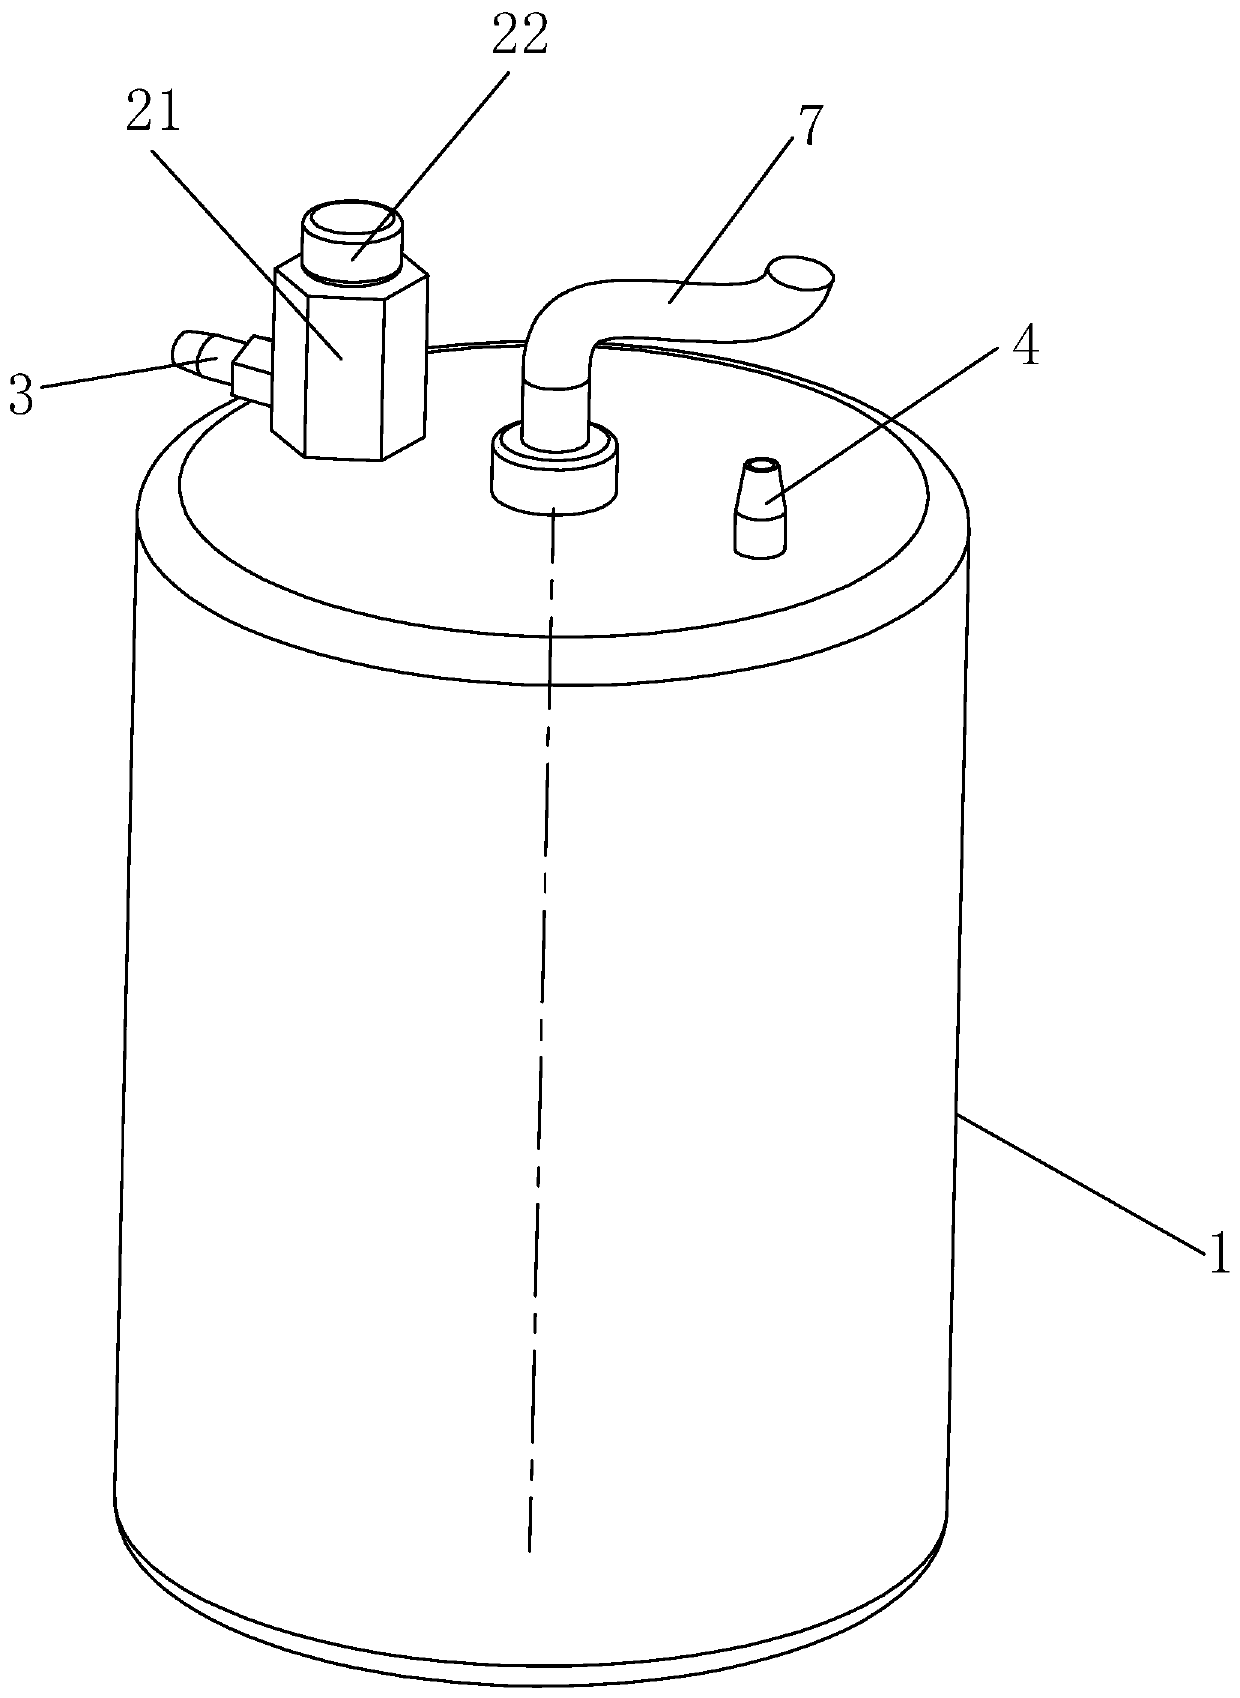 Portable oxygen-inhalation heater based on phase-change thermal storage